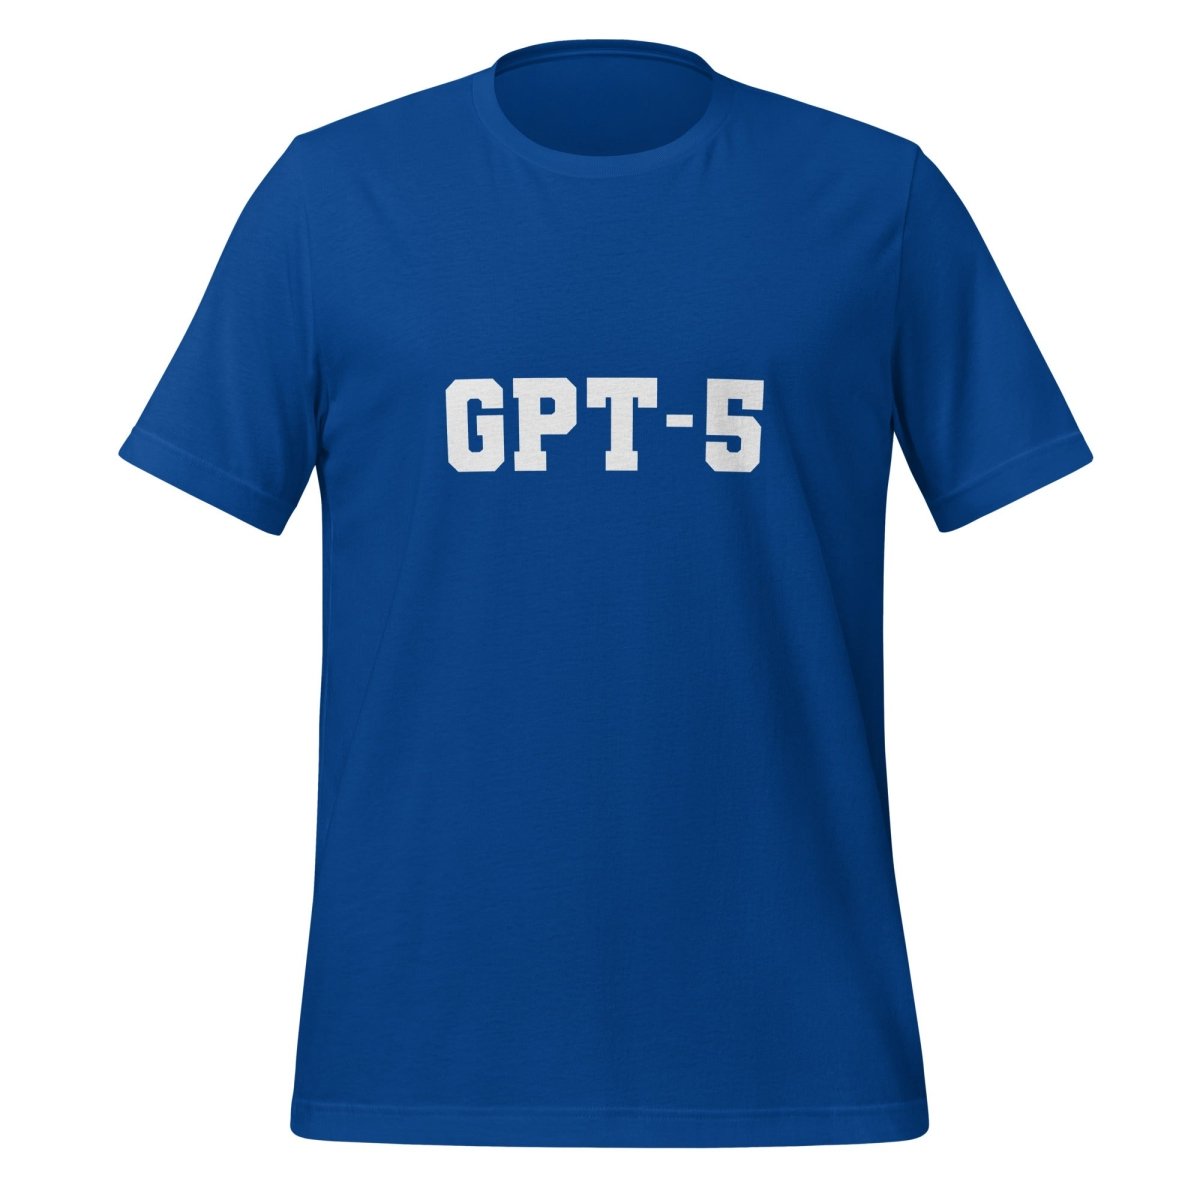 GPT - 5 T - Shirt 3 (unisex) - True Royal - AI Store